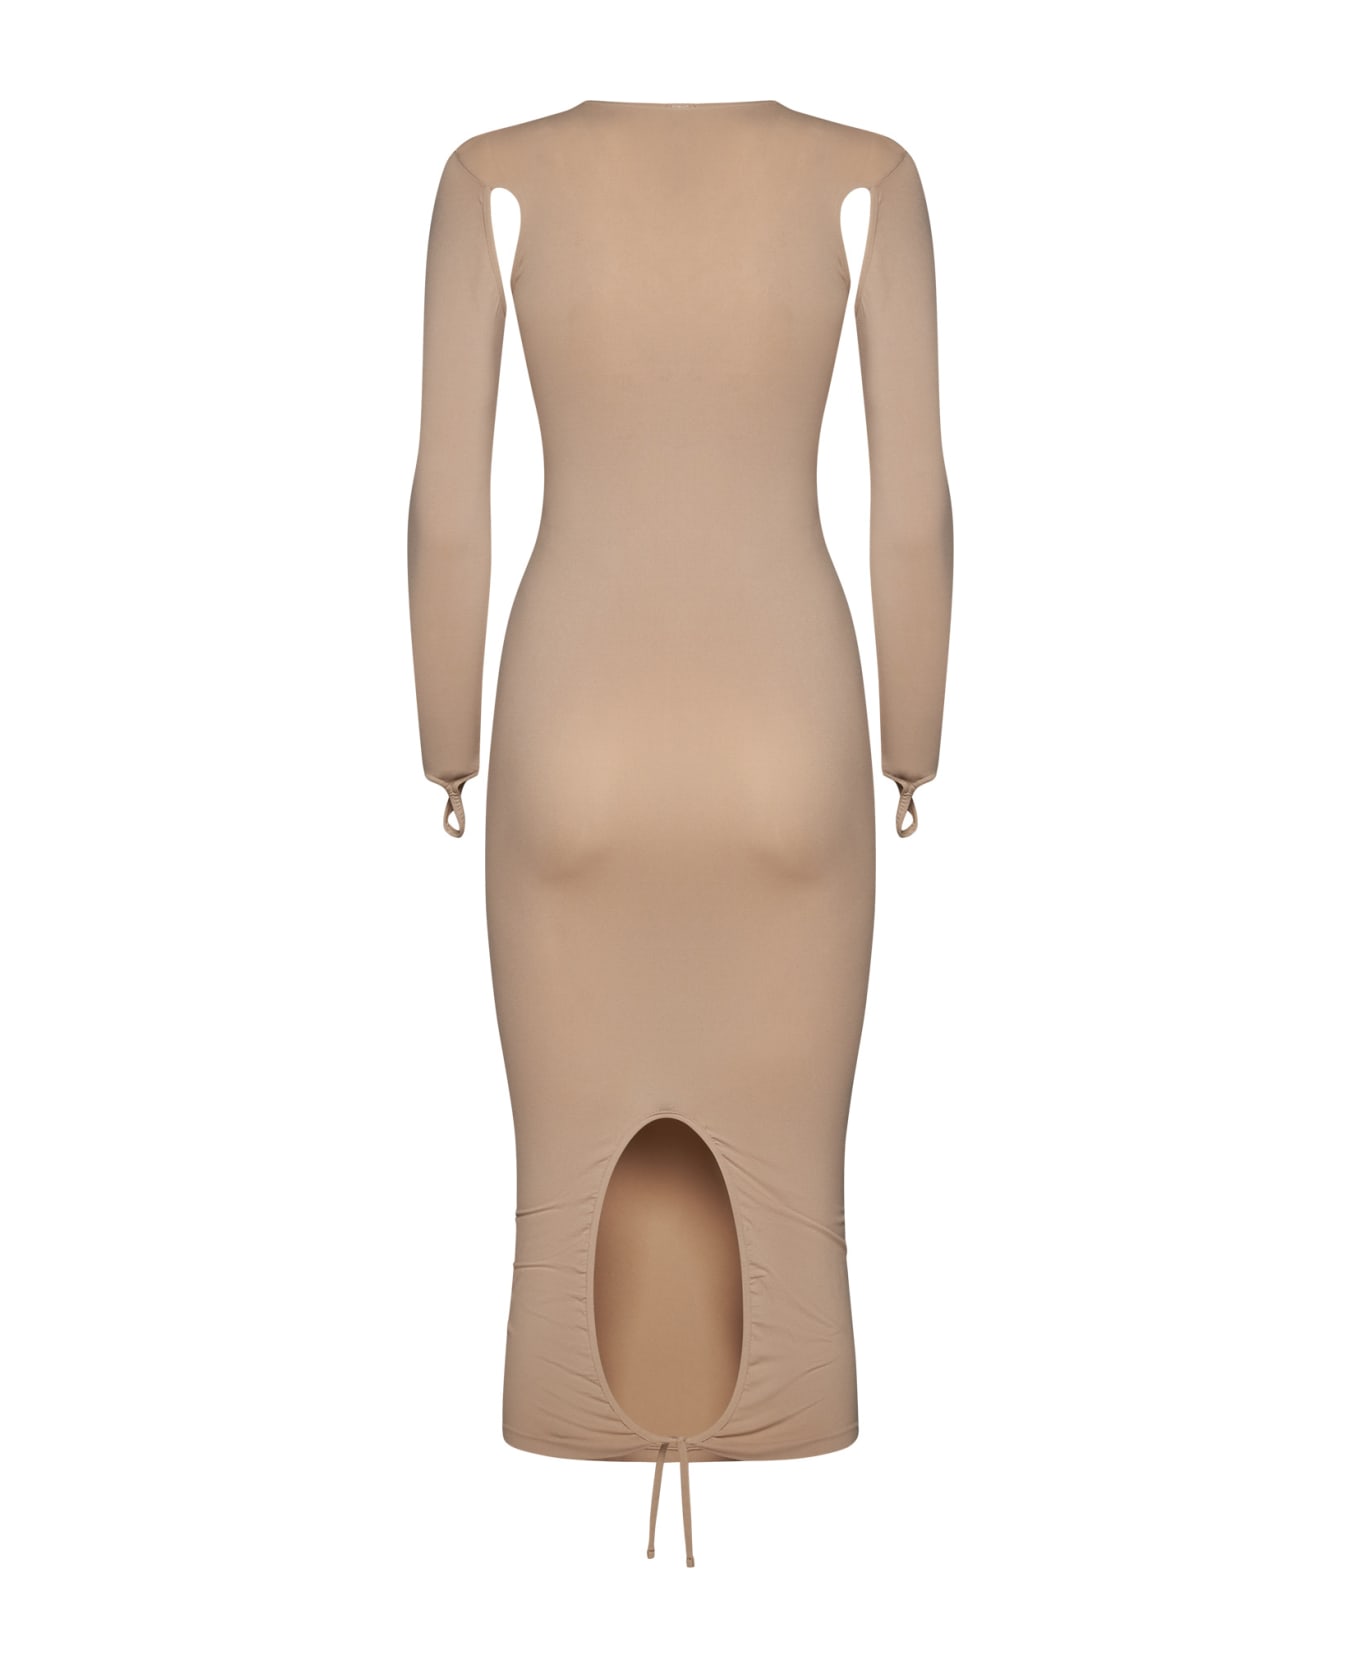 ANDREĀDAMO Dress - Nude